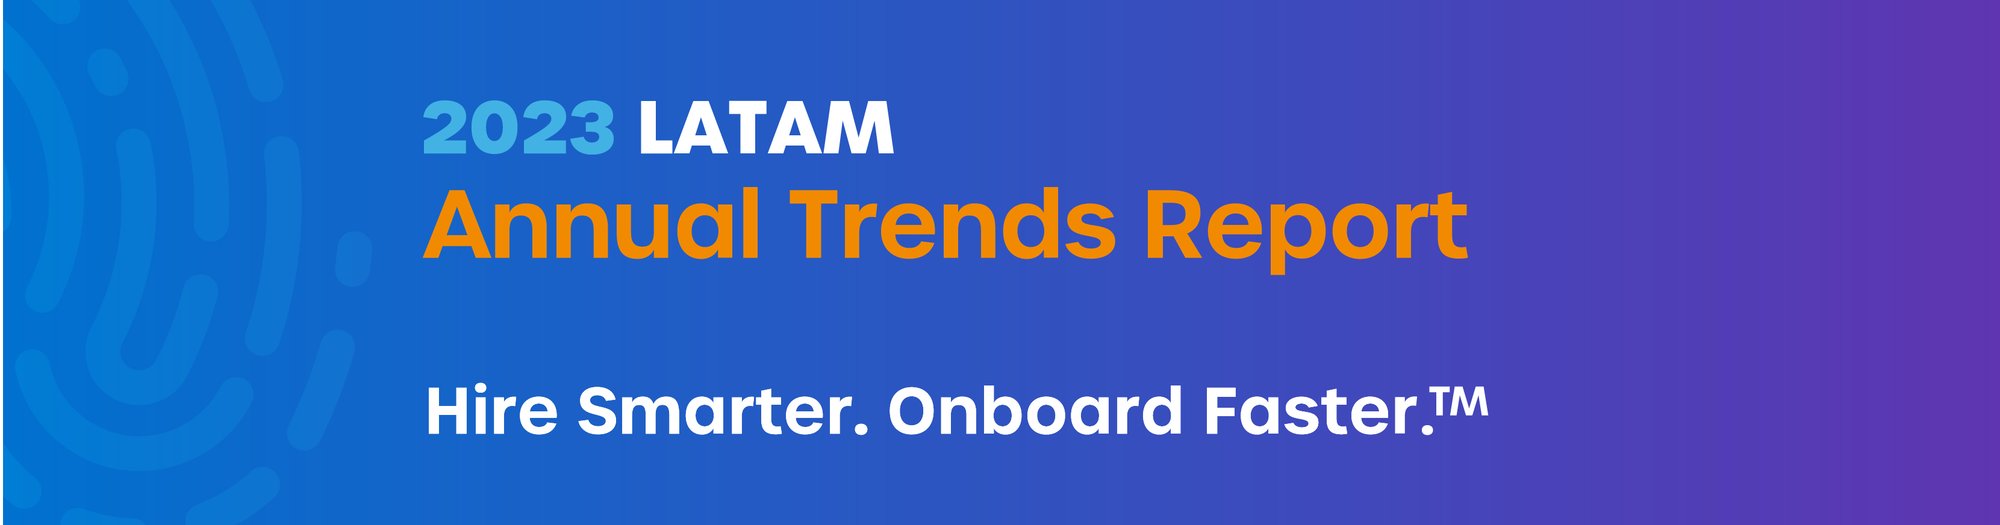 Header_LATAM Annual Trends Report 2023 English-1